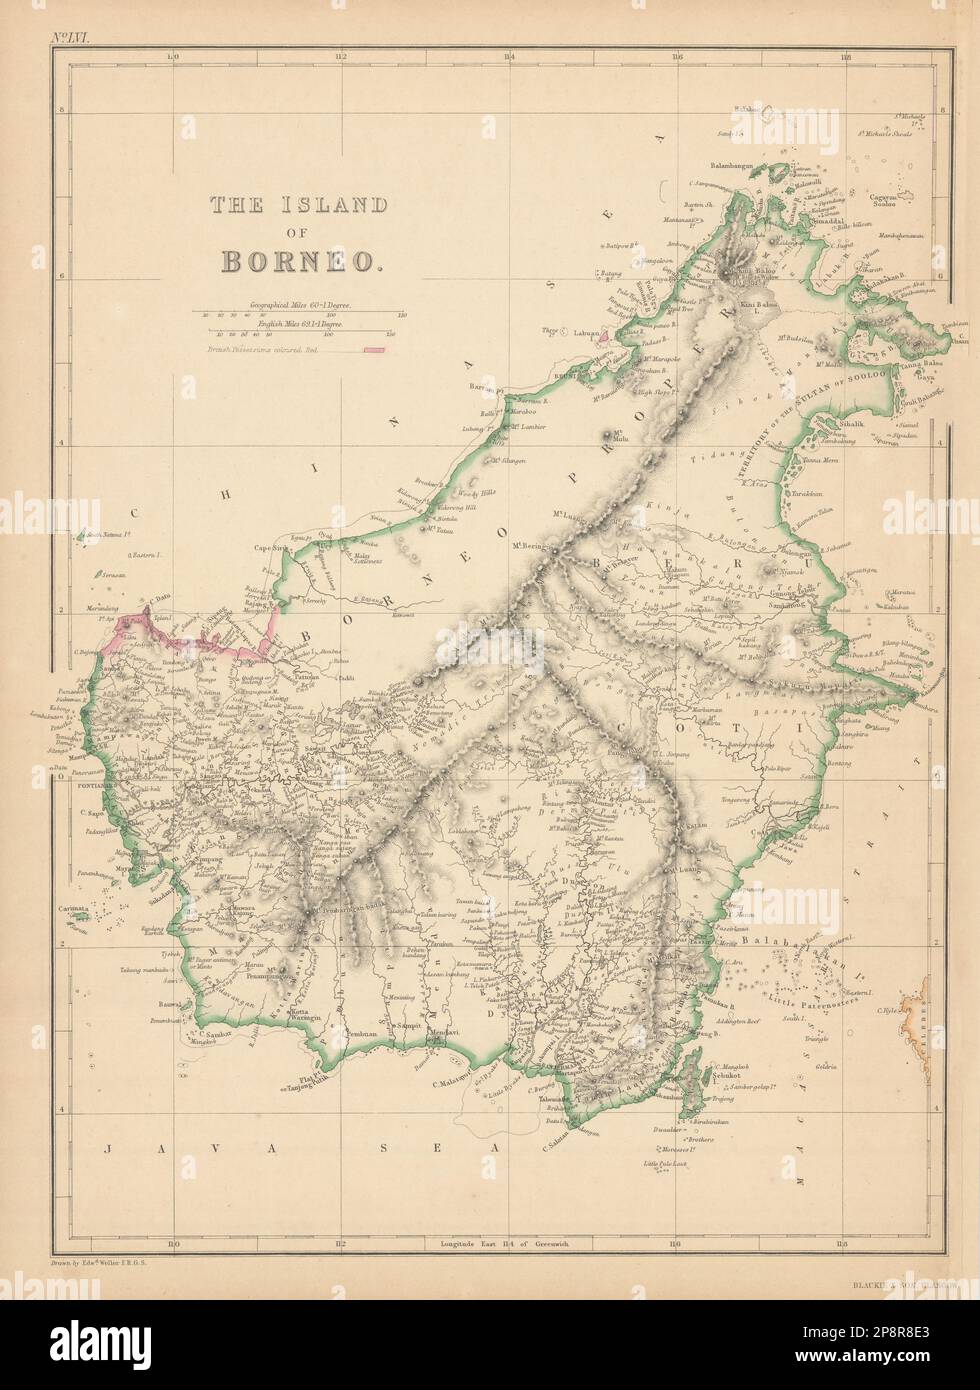 The Island of Borneo by Edward Weller. Sarawak Sabah Brunei Kalimantan 1859 map Stock Photo